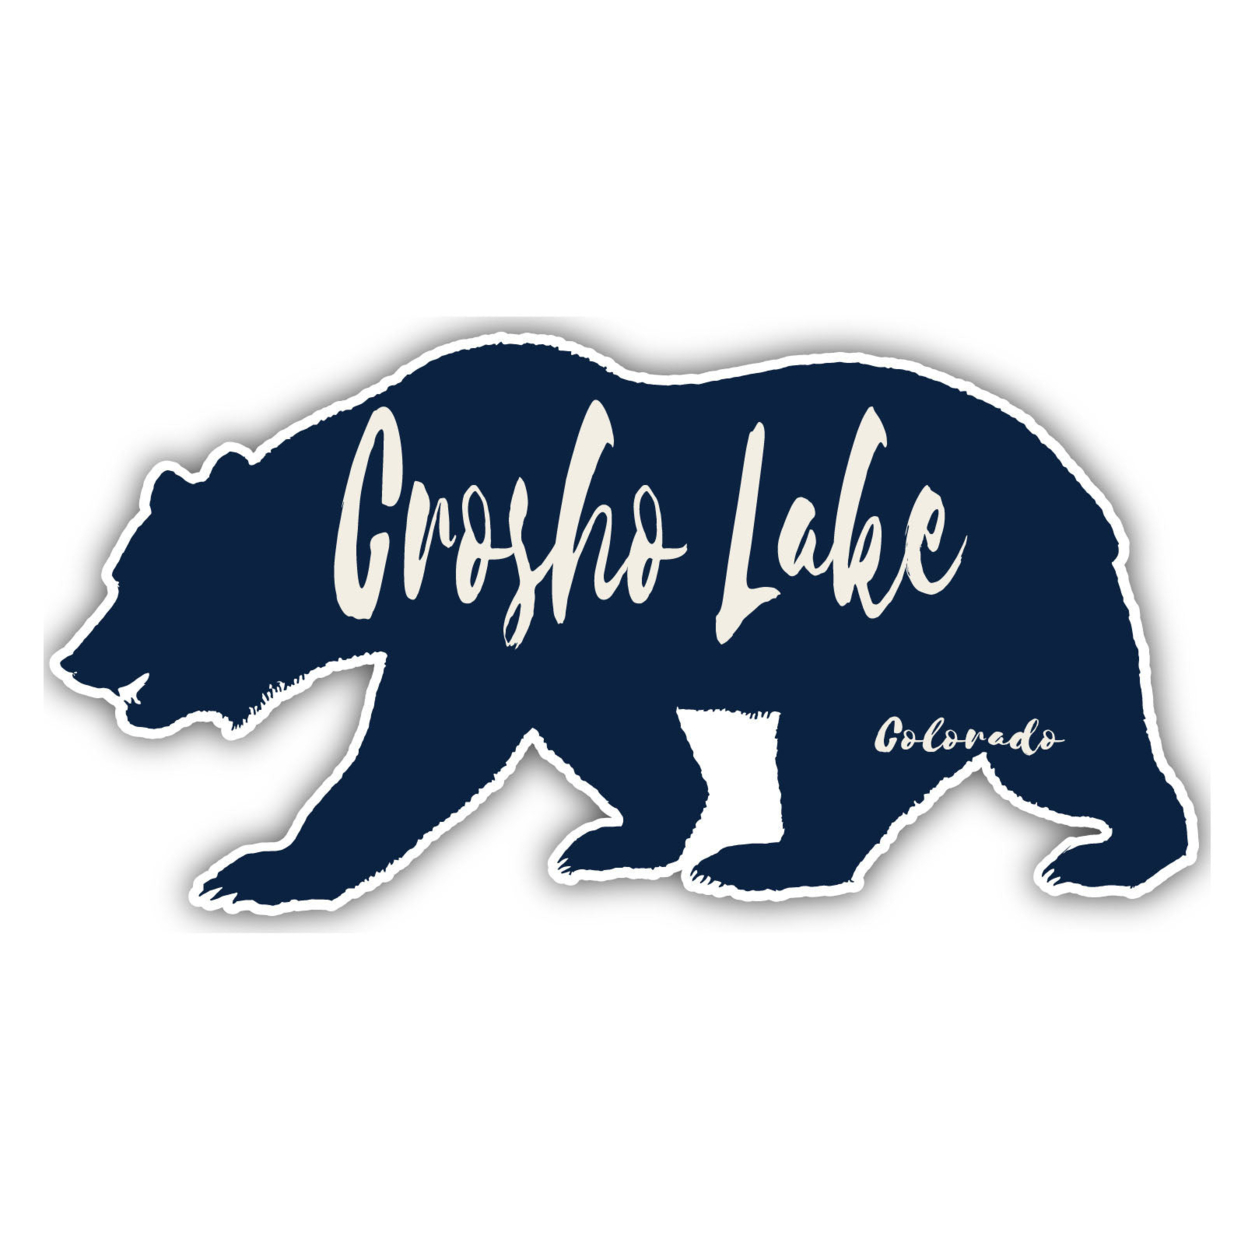 Crosho Lake Colorado Souvenir Decorative Stickers (Choose Theme And Size) - Single Unit, 6-Inch, Bear